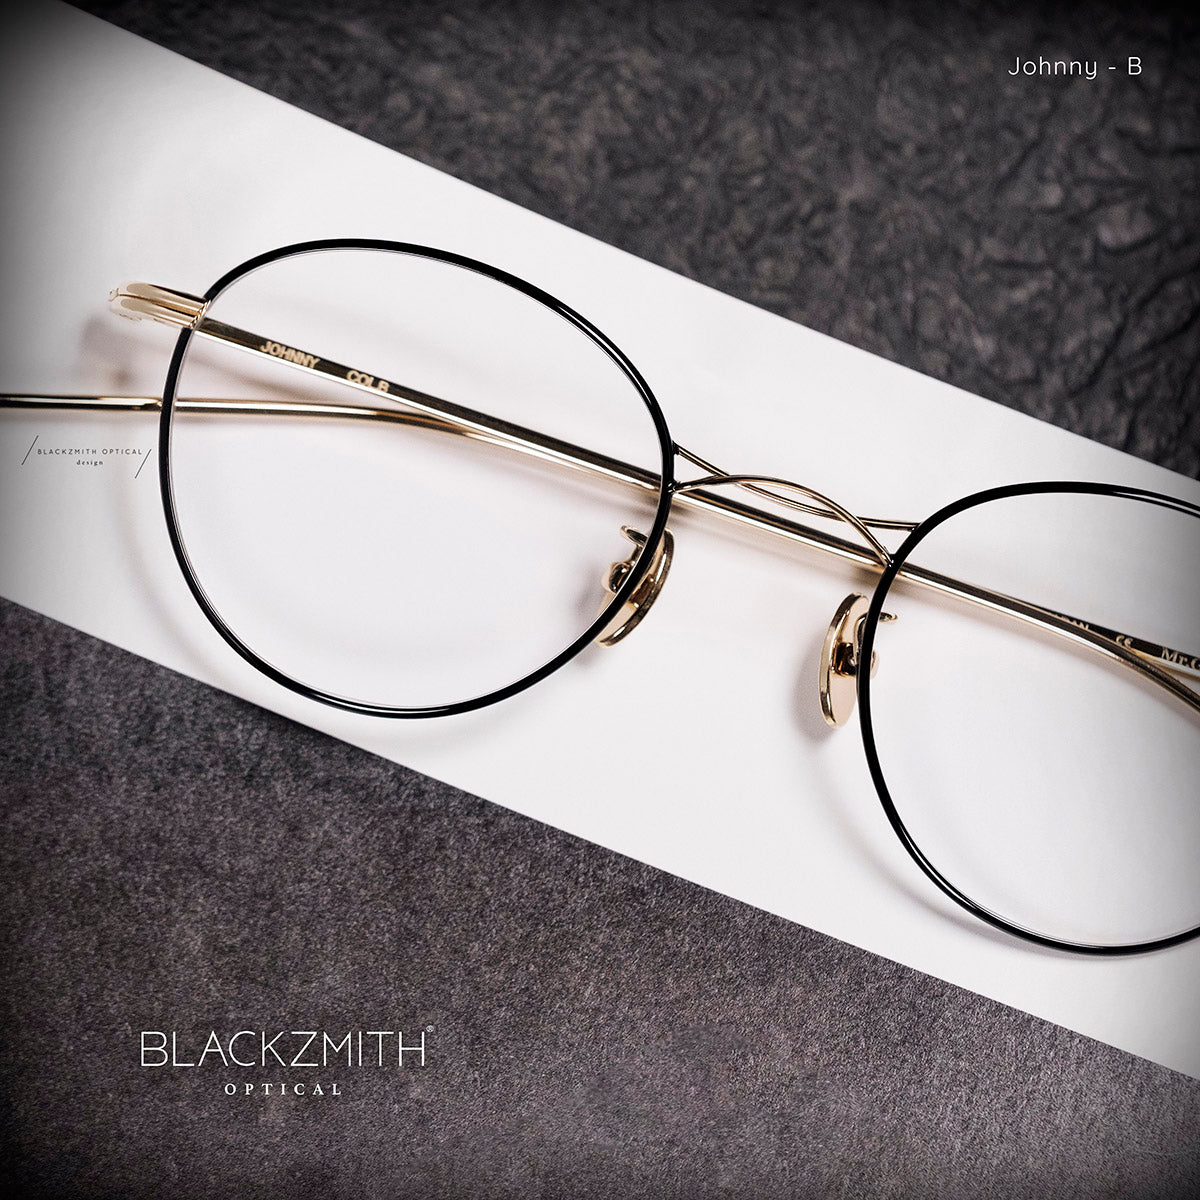 Mr.Gentleman - Johnny-B – BLACKZMITH Optical